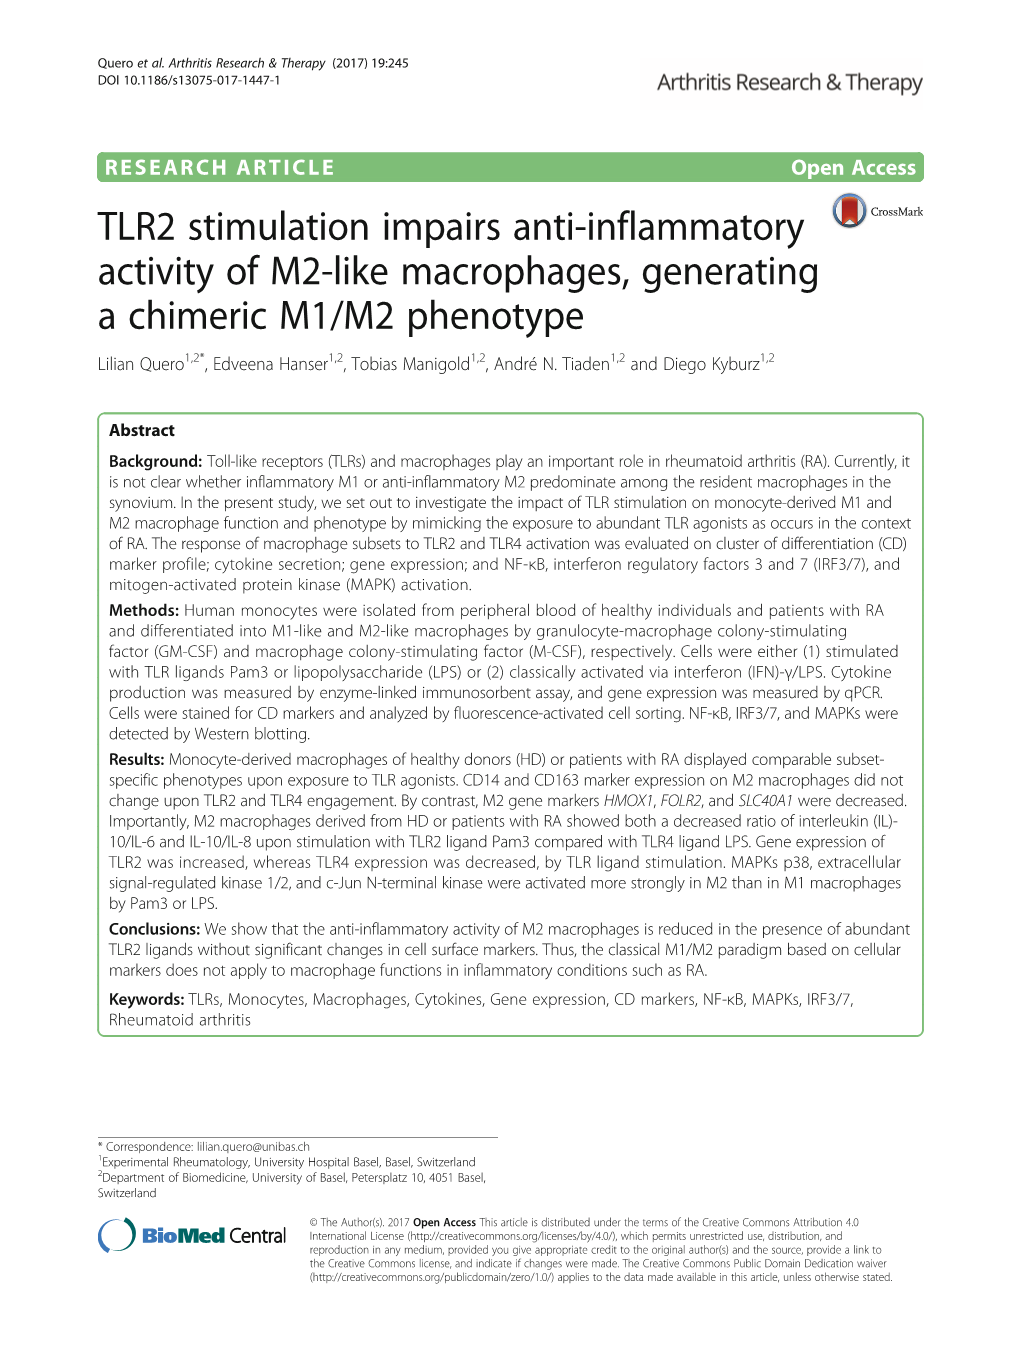 TLR2 Stimulation Impairs Anti-Inflammatory Activity of M2-Like Macrophages, Generating a Chimeric M1/M2 Phenotype